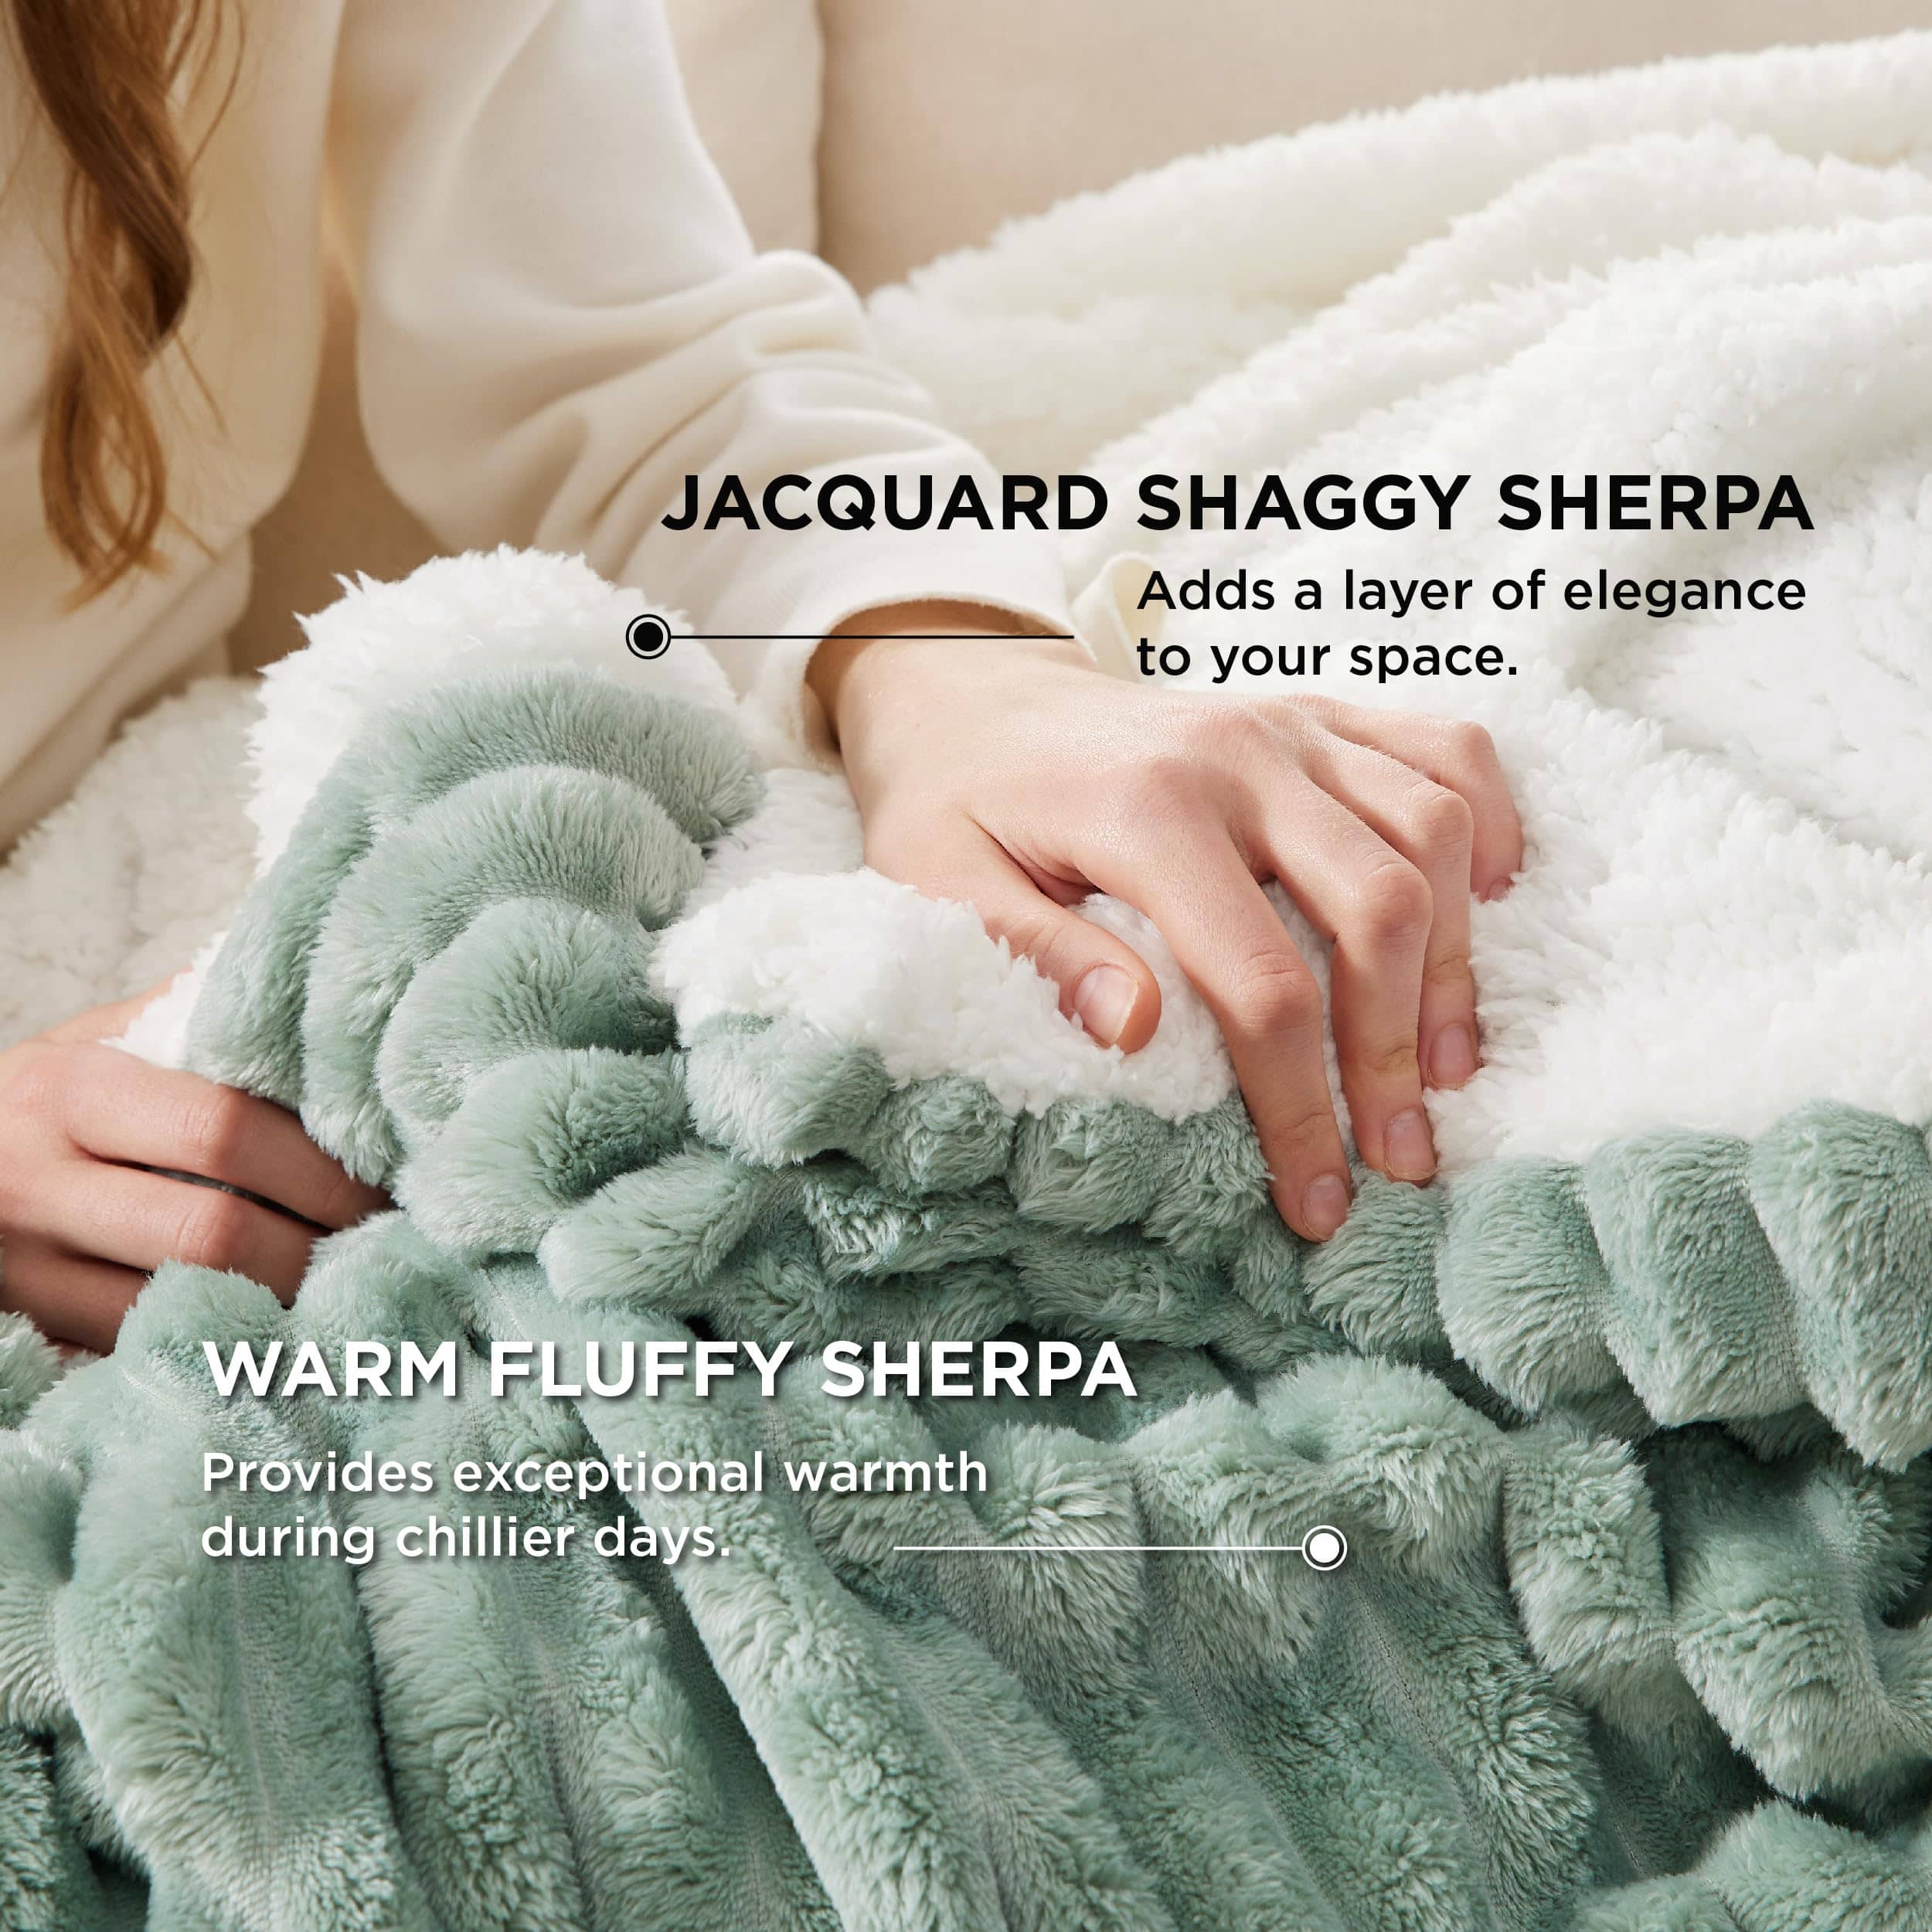 Bedsure Jacquard Stripes Shaggy Sherpa Blanket